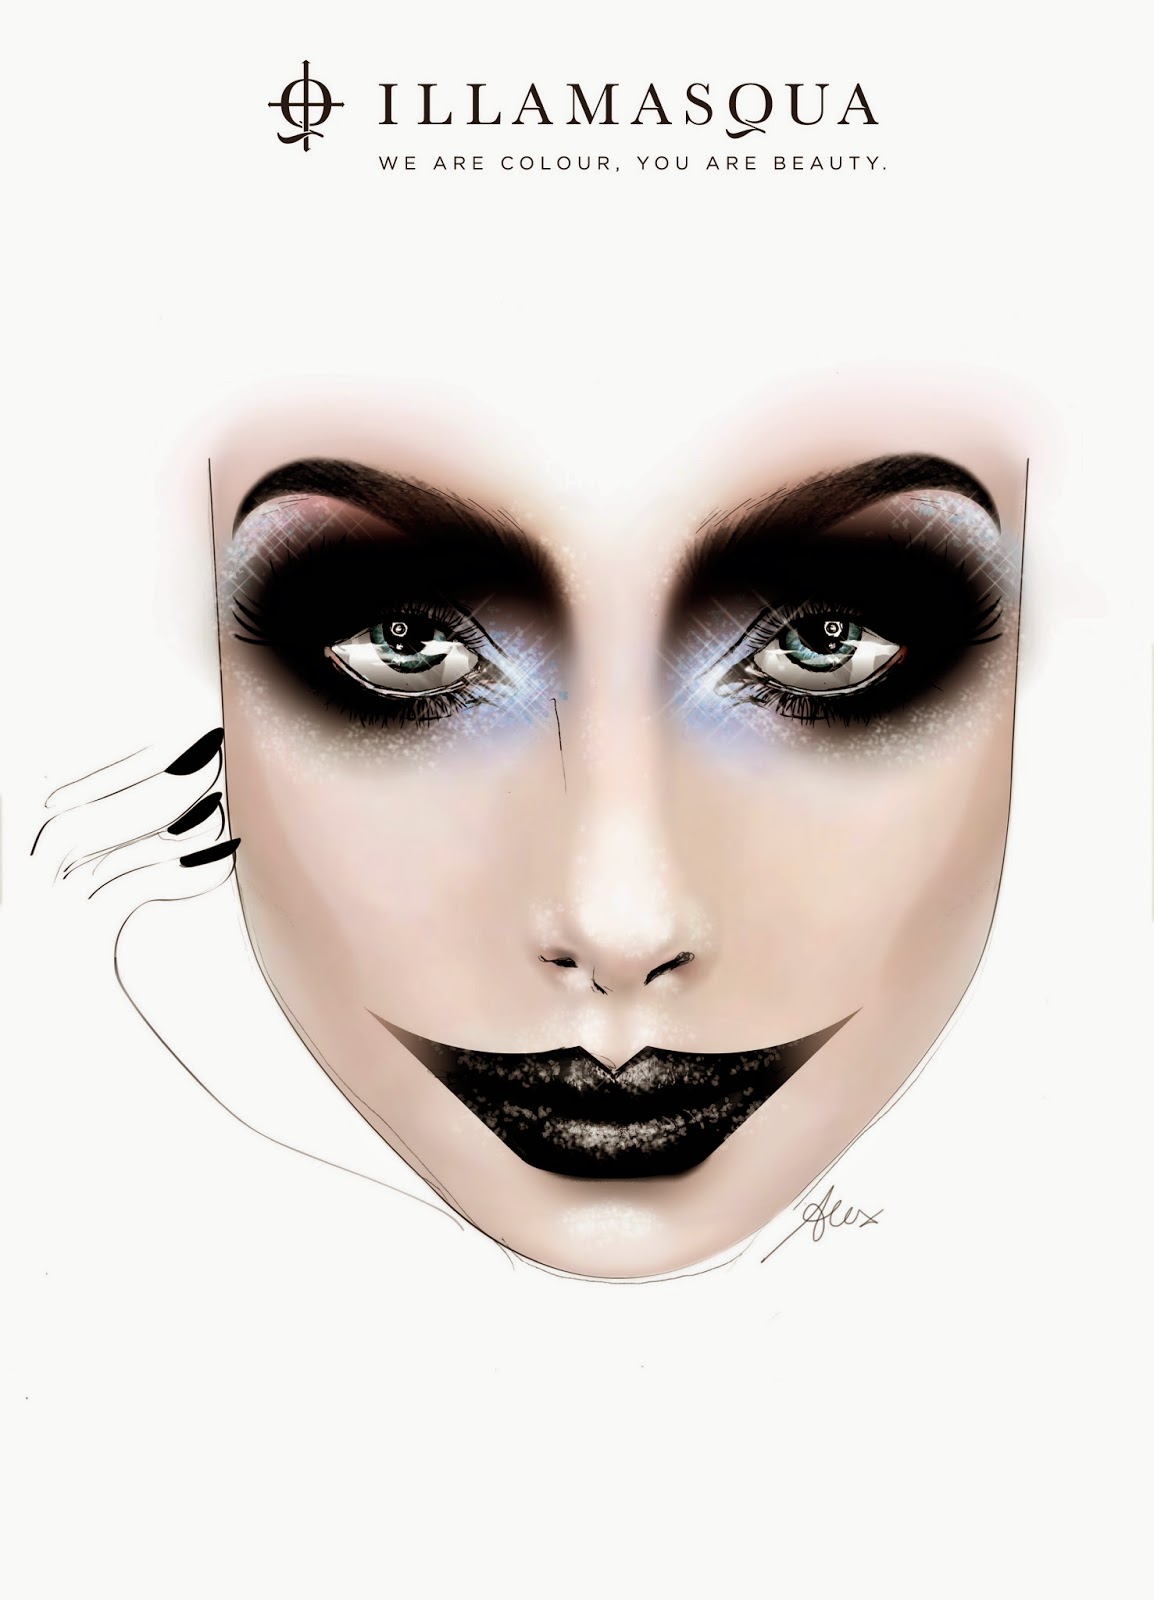 Beauty By Benz: Halloween makeup ideas from Illamasqua